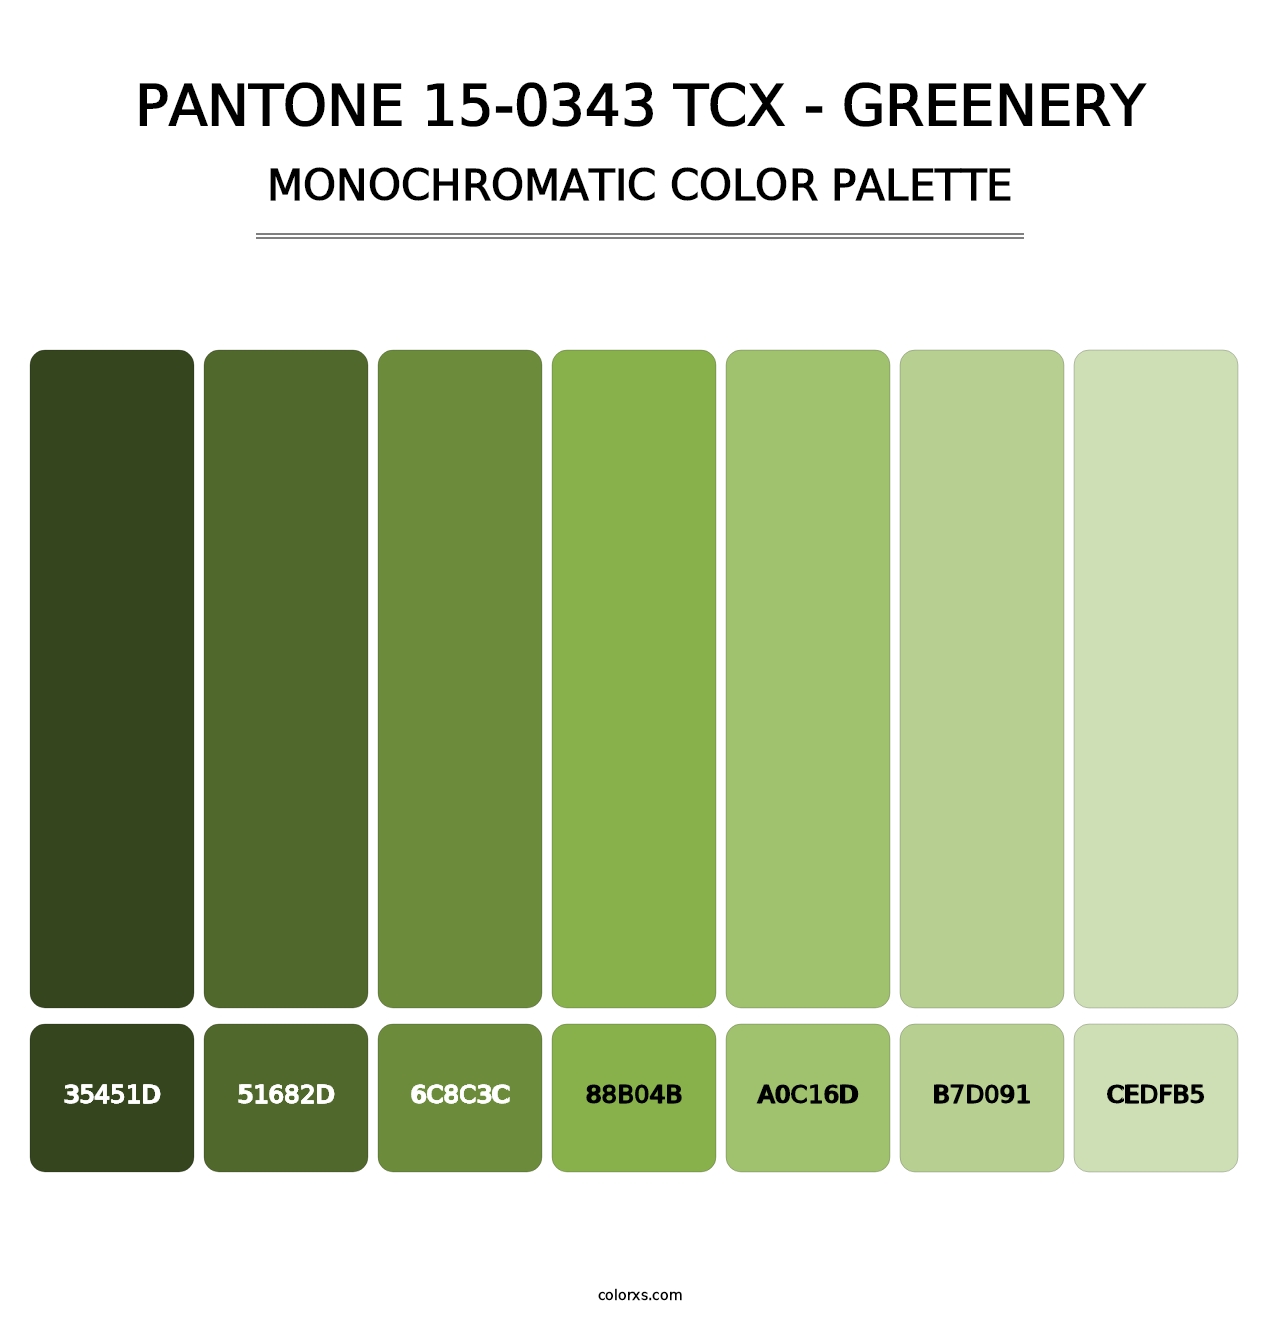 PANTONE 15-0343 TCX - Greenery - Monochromatic Color Palette